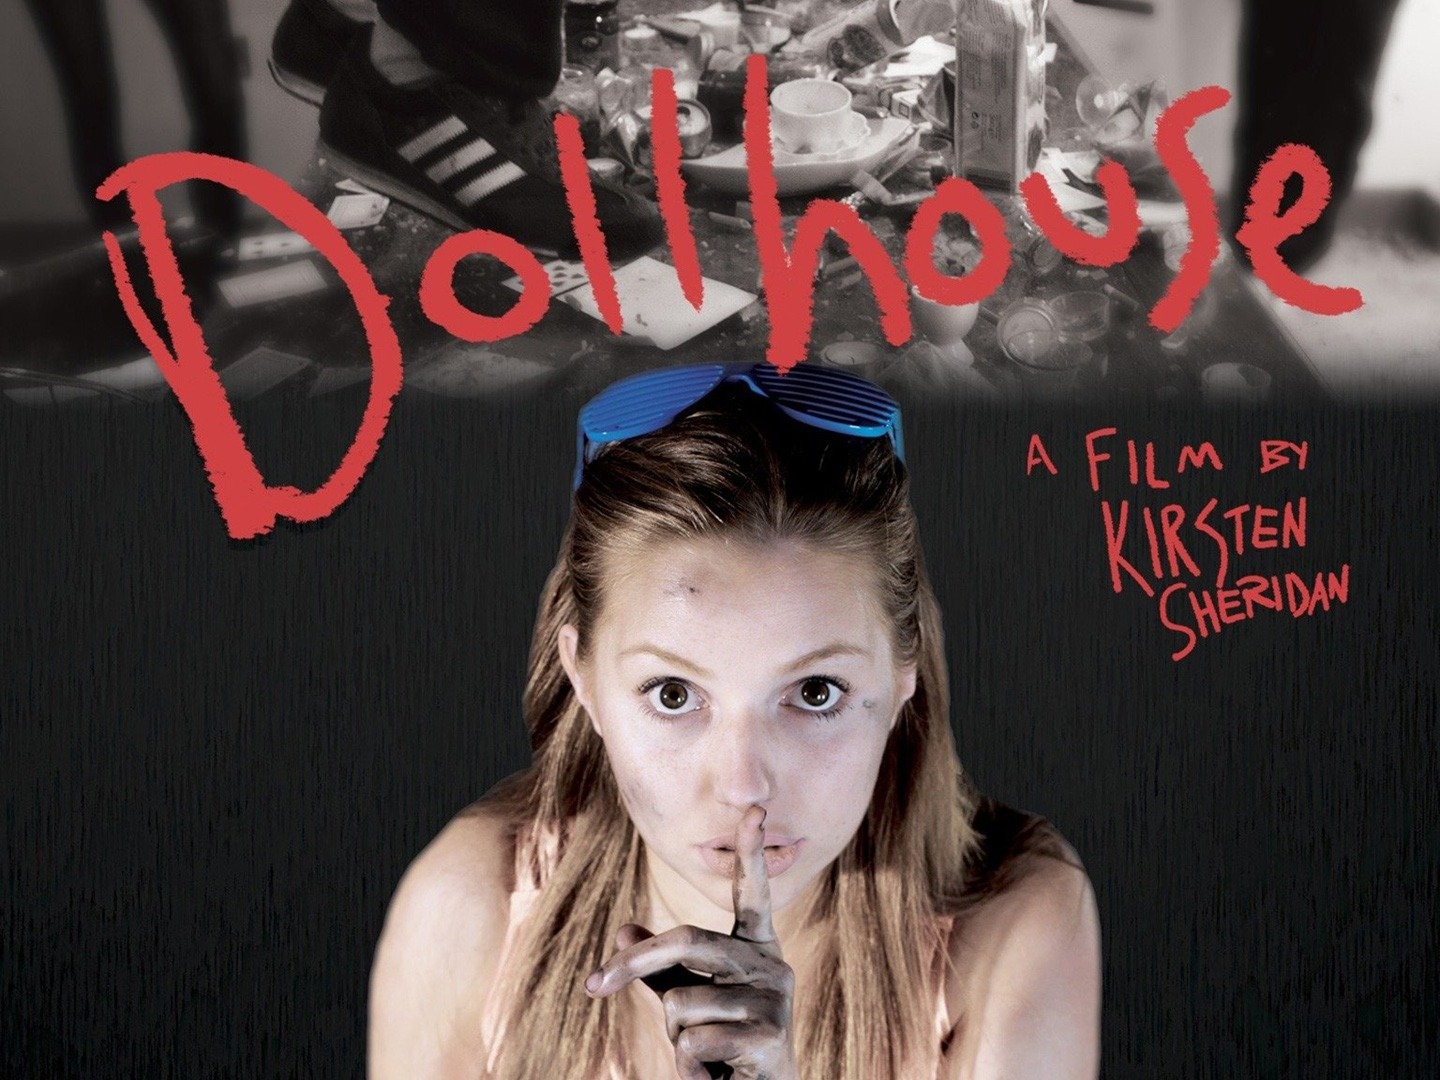 Dollhouse - Rotten Tomatoes